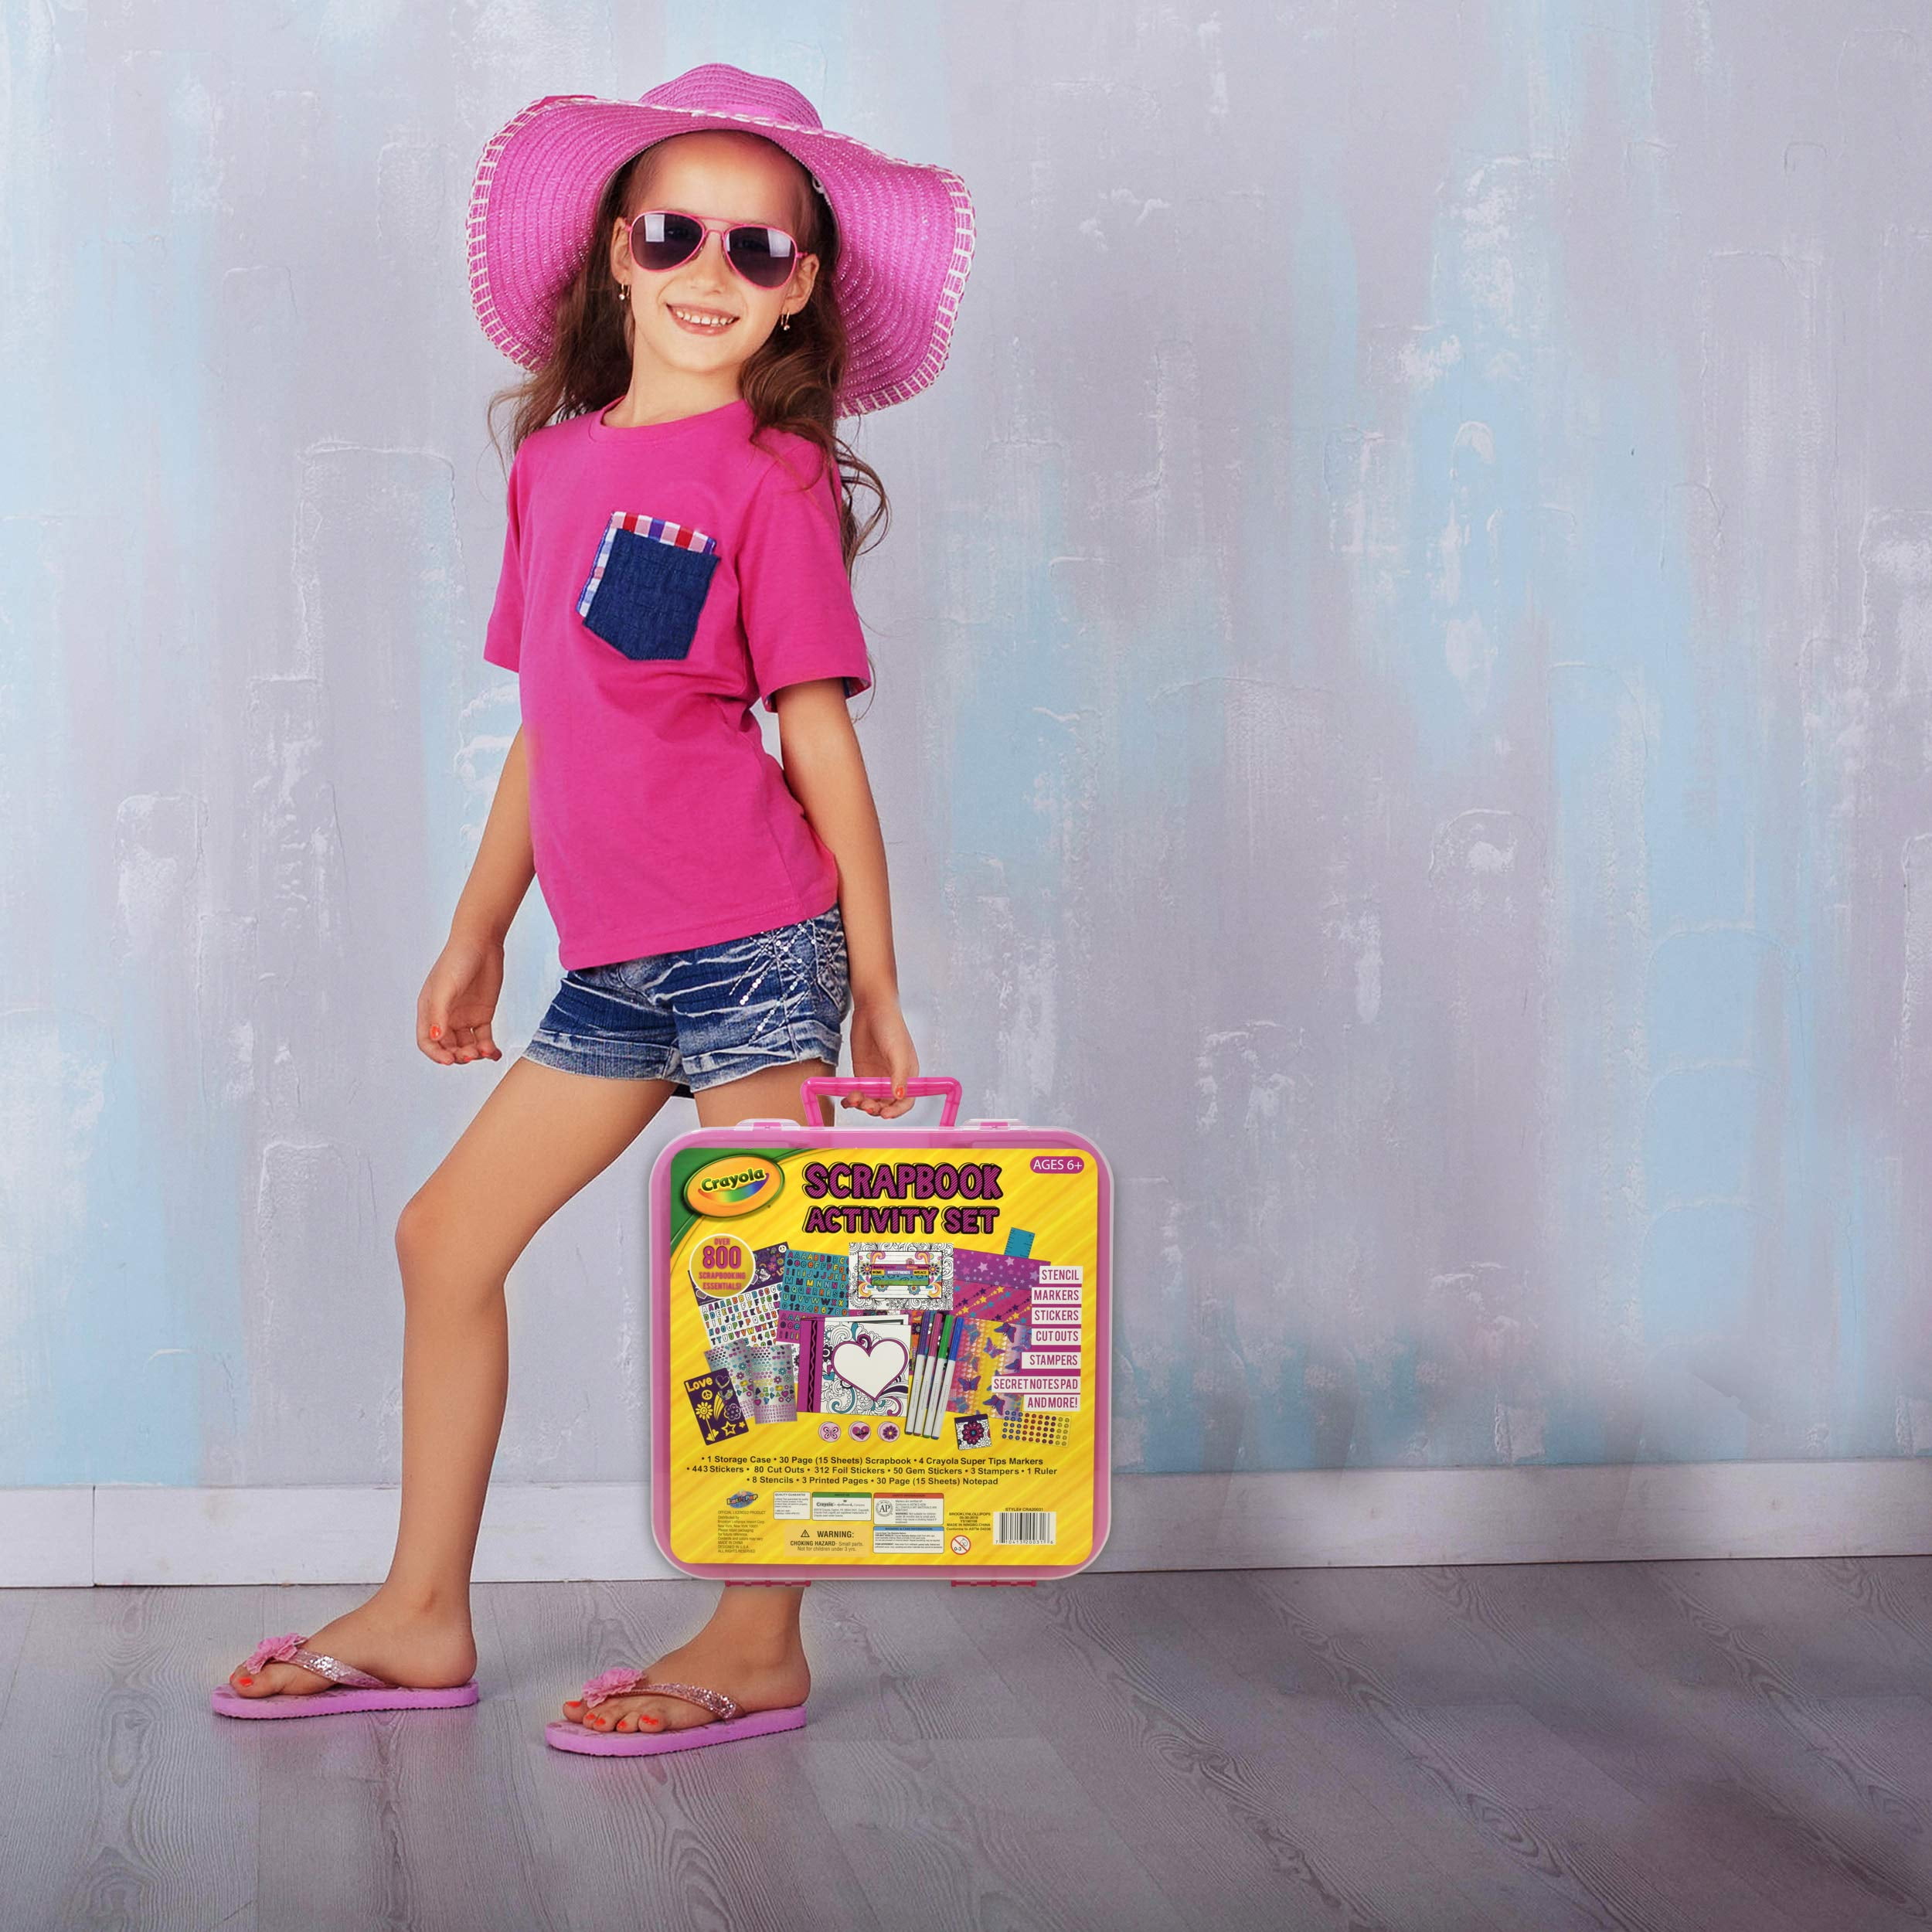 out of stock‼️ Crayola 115pc Kids' Super Art & Craft Kit $10000